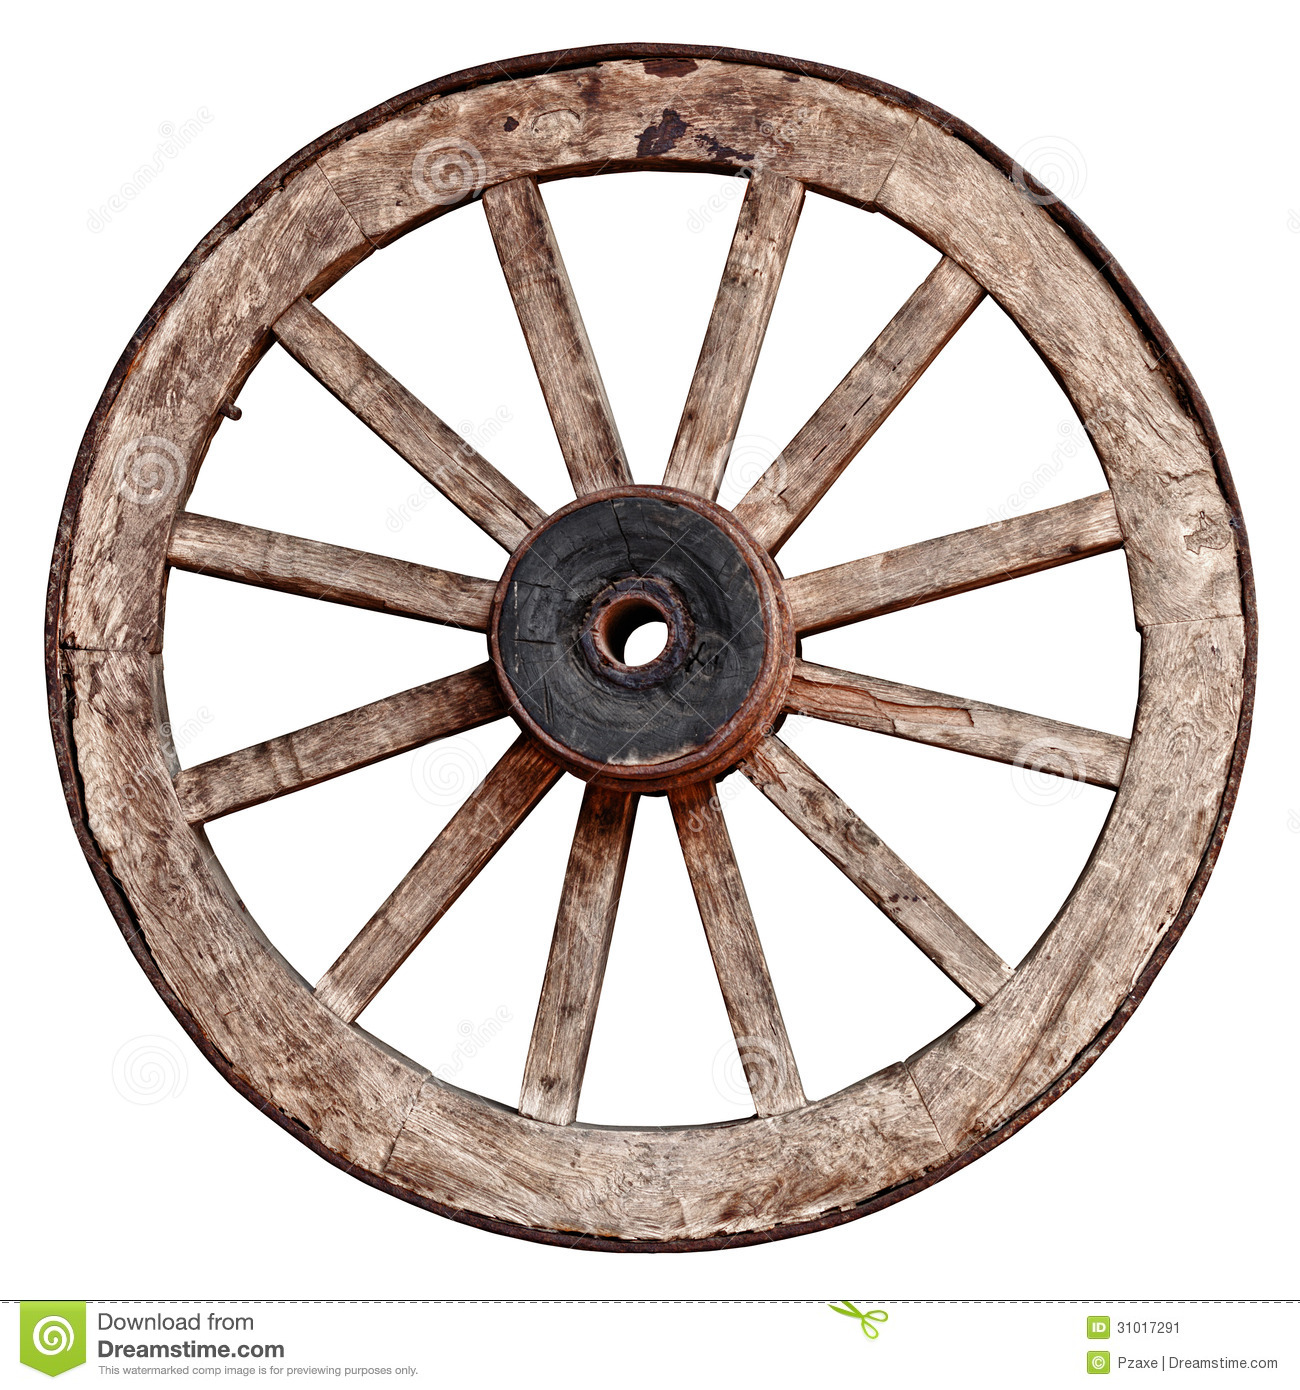 Old Wooden Wagon Wheel On White Background Stock Image   Image    